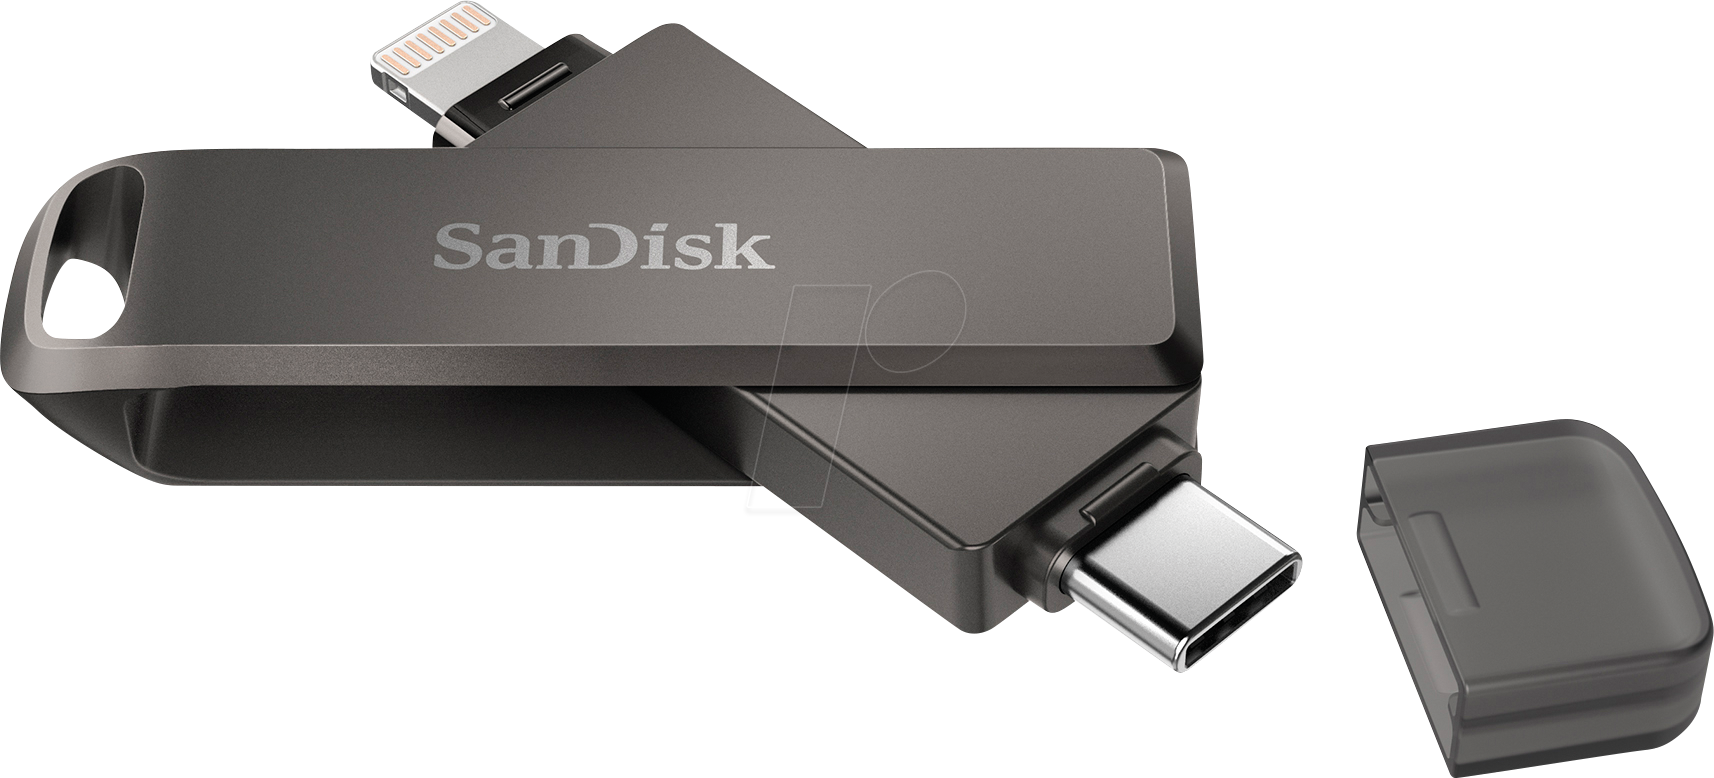 SDIX70N256GGN6NE: Clé USB, USB 3.0, 256 Go, iXpand luxe, Lightning, USB-C.  chez reichelt elektronik